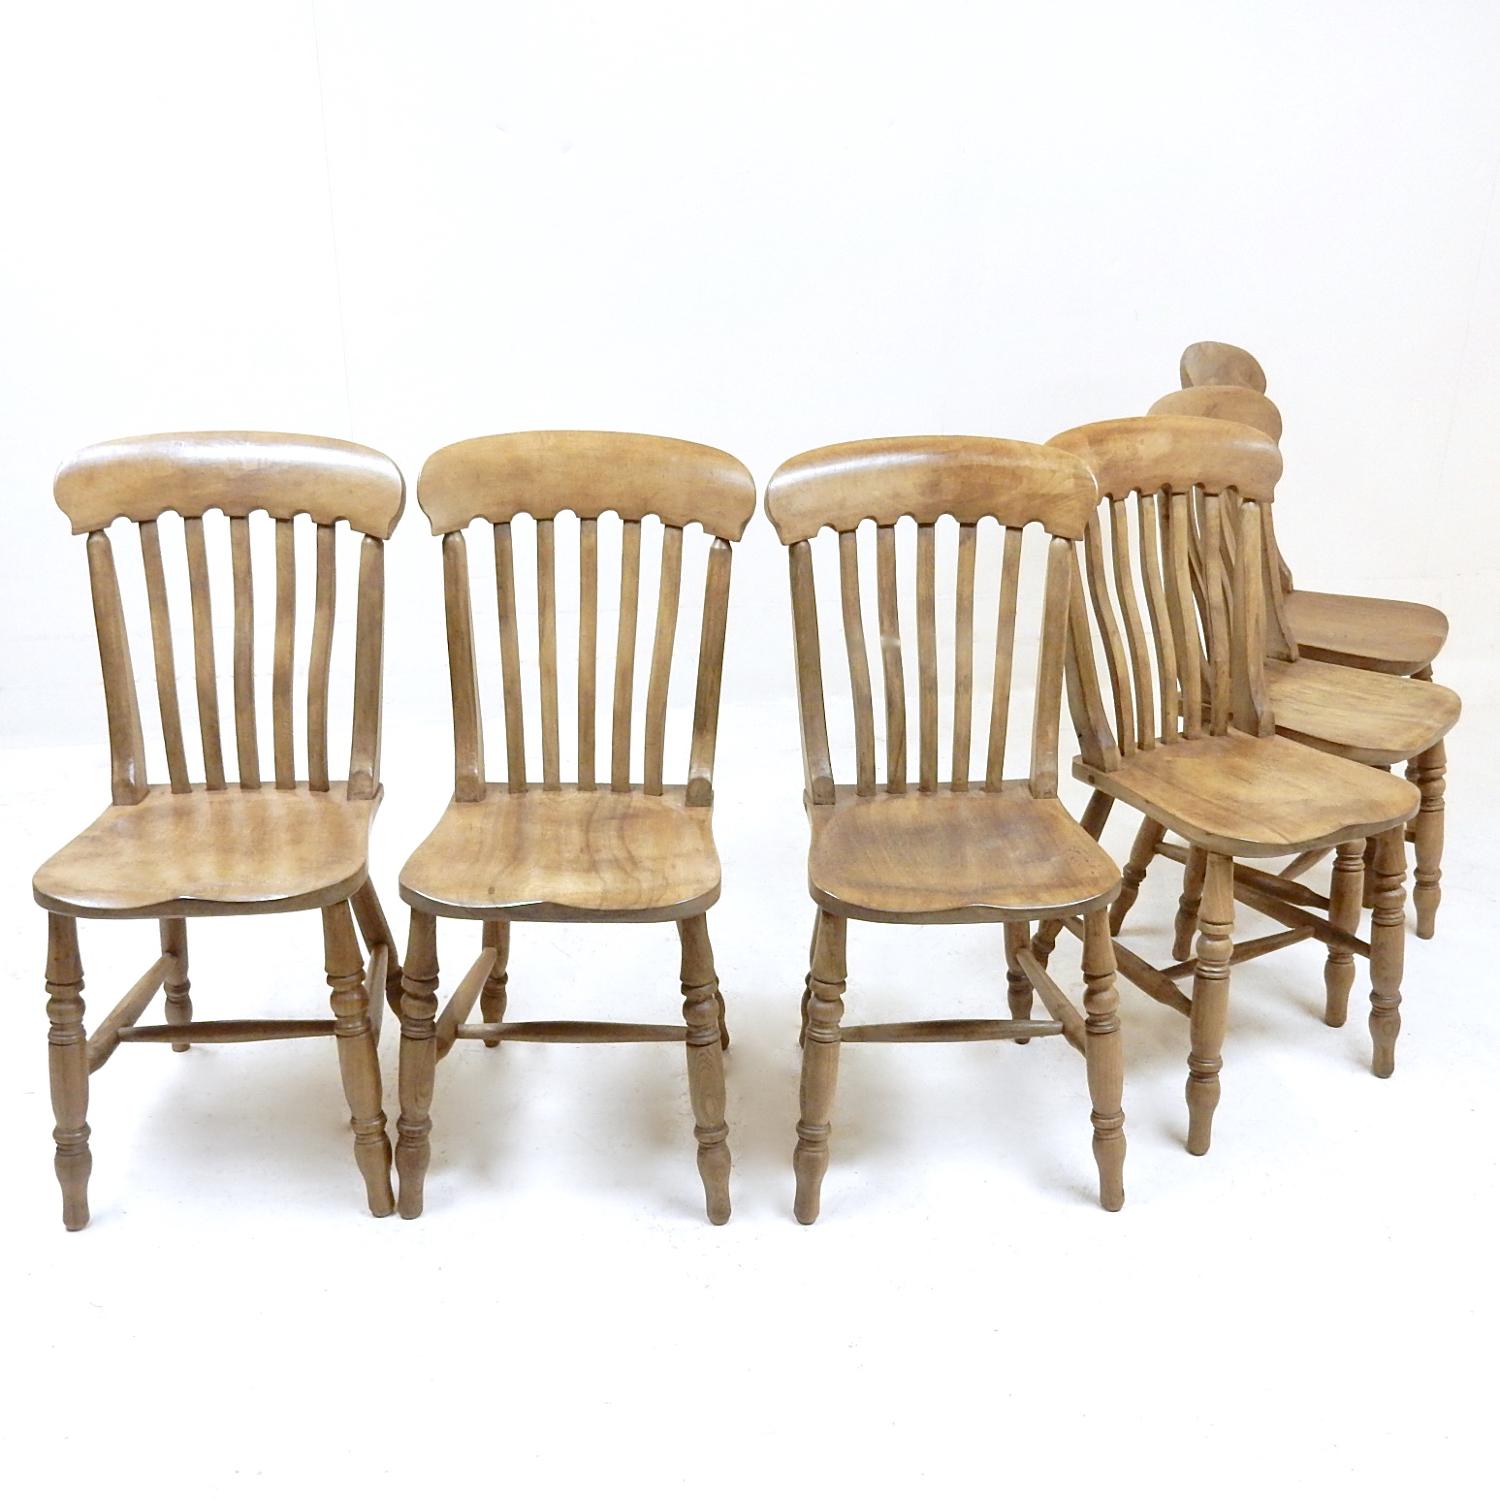 Antique Windsor Kitchen Chairs